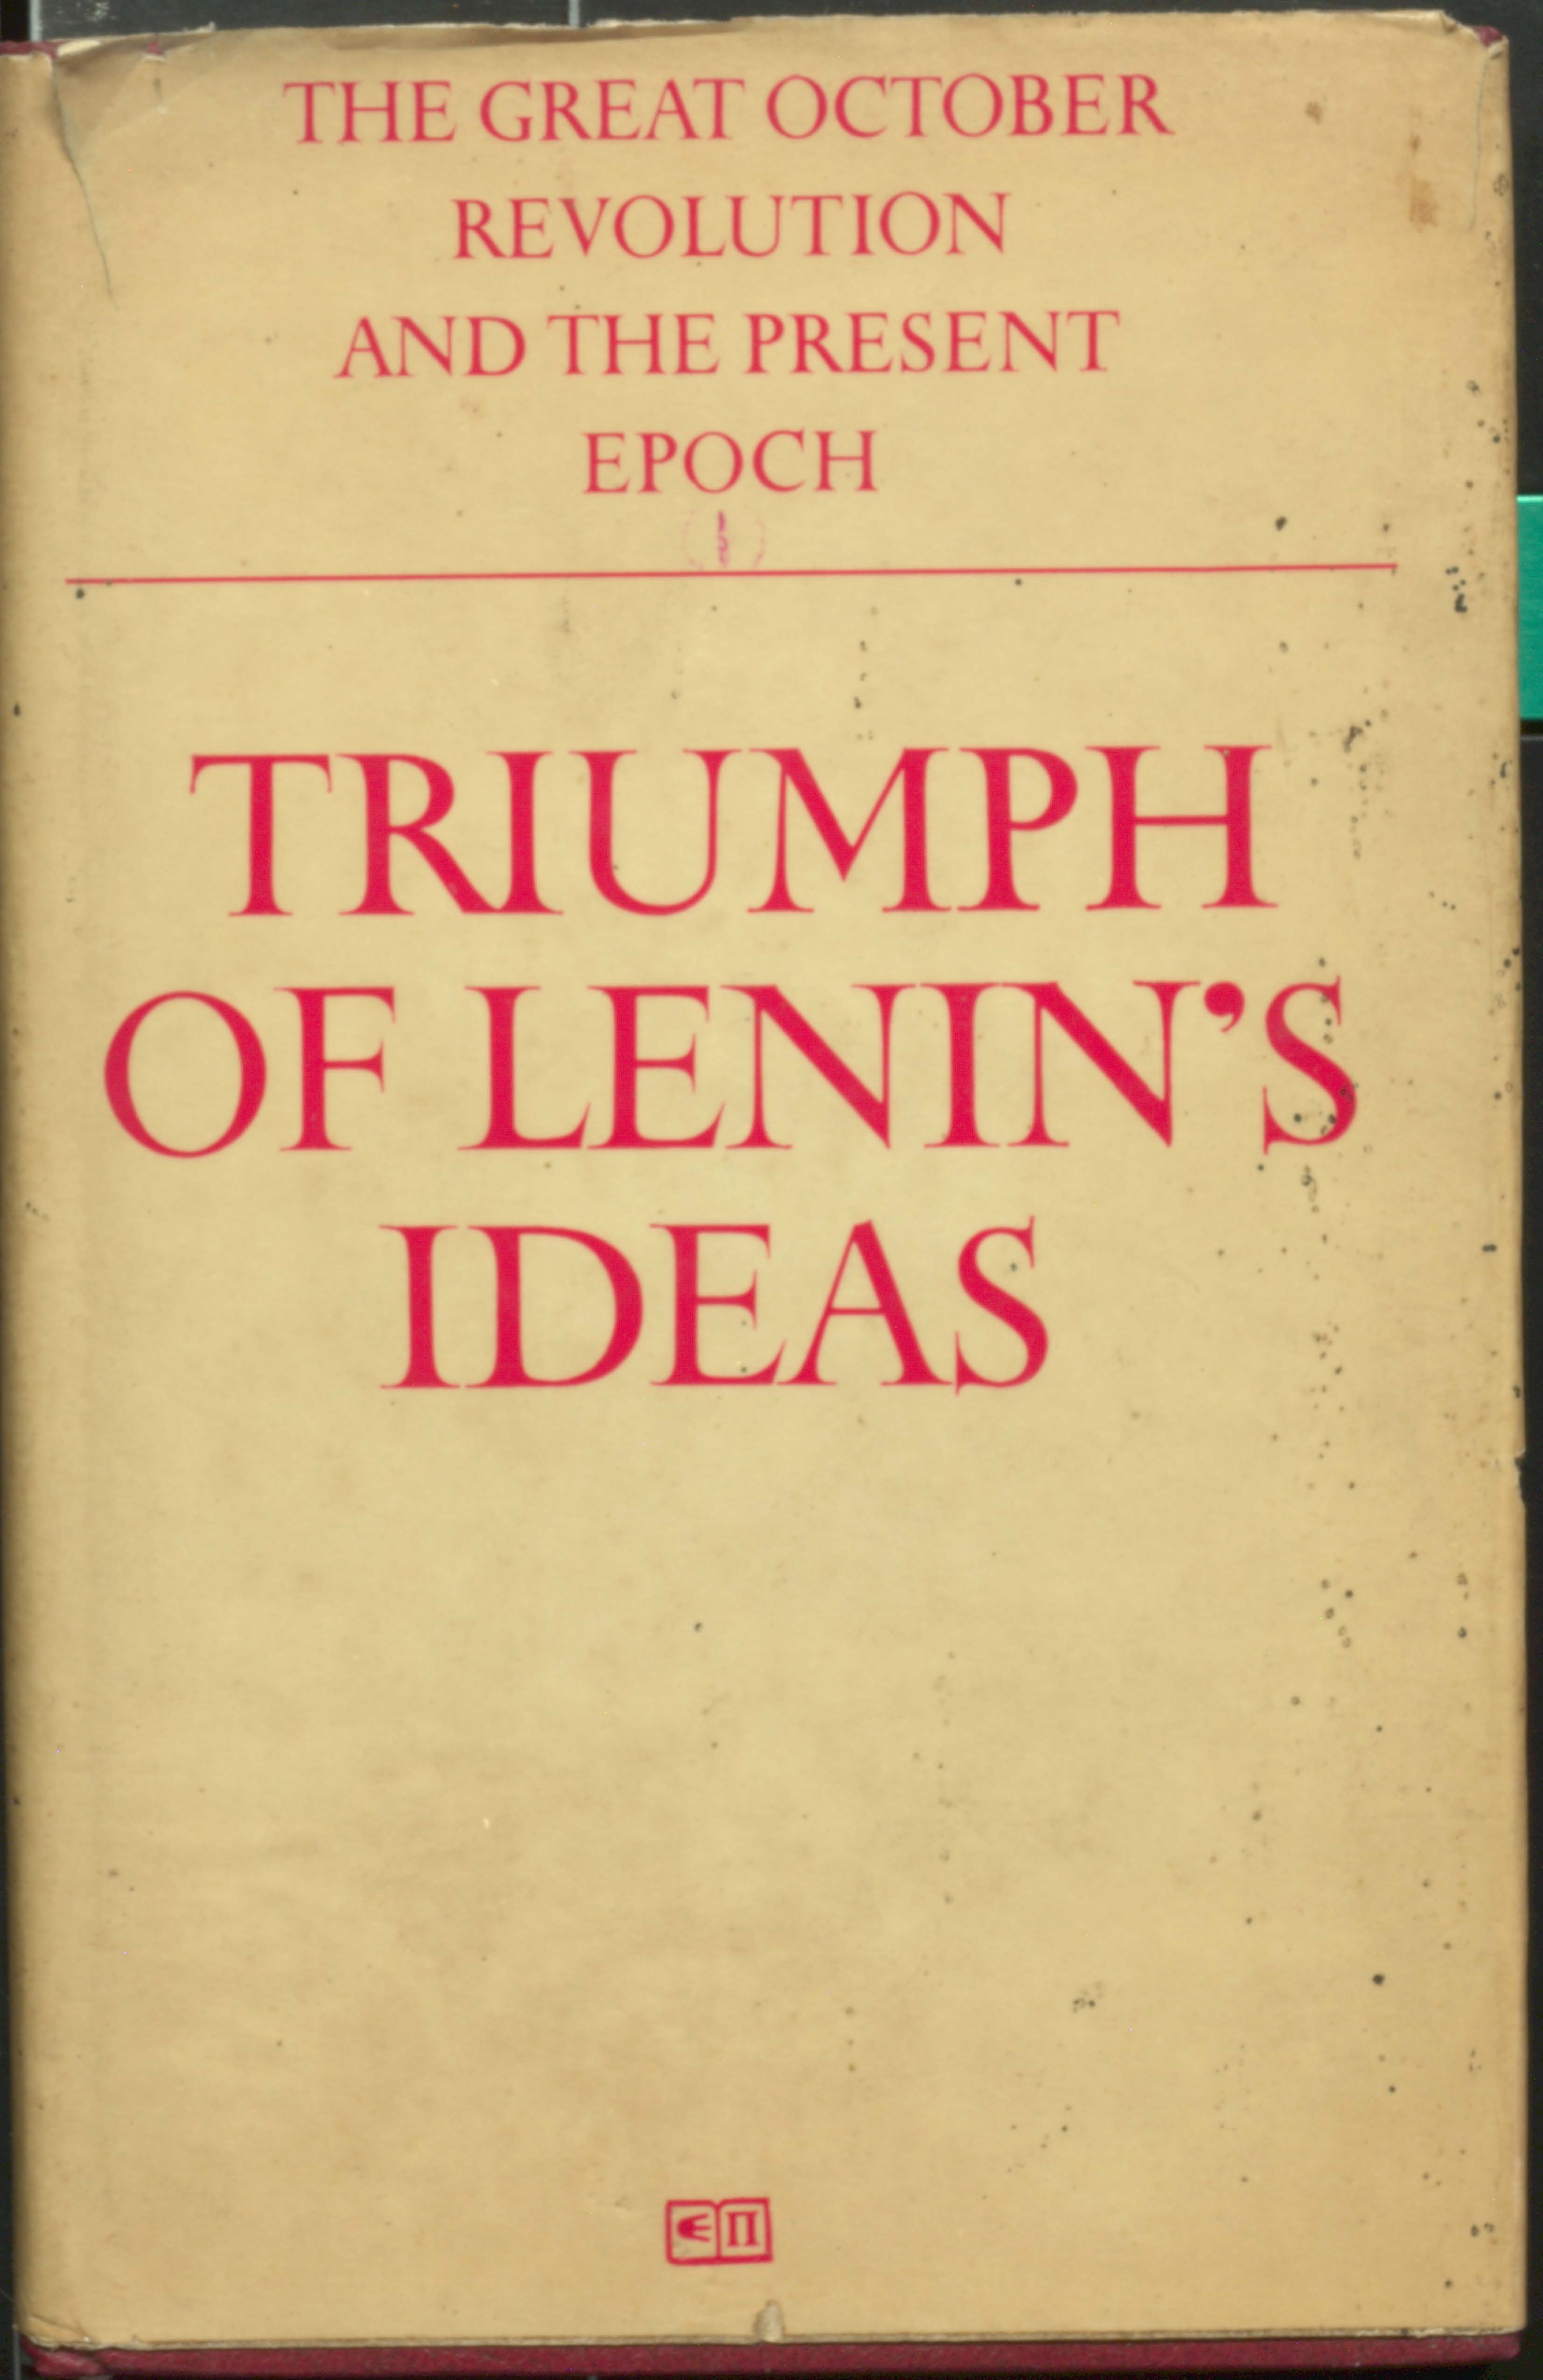 Triumph of lenin's idea's